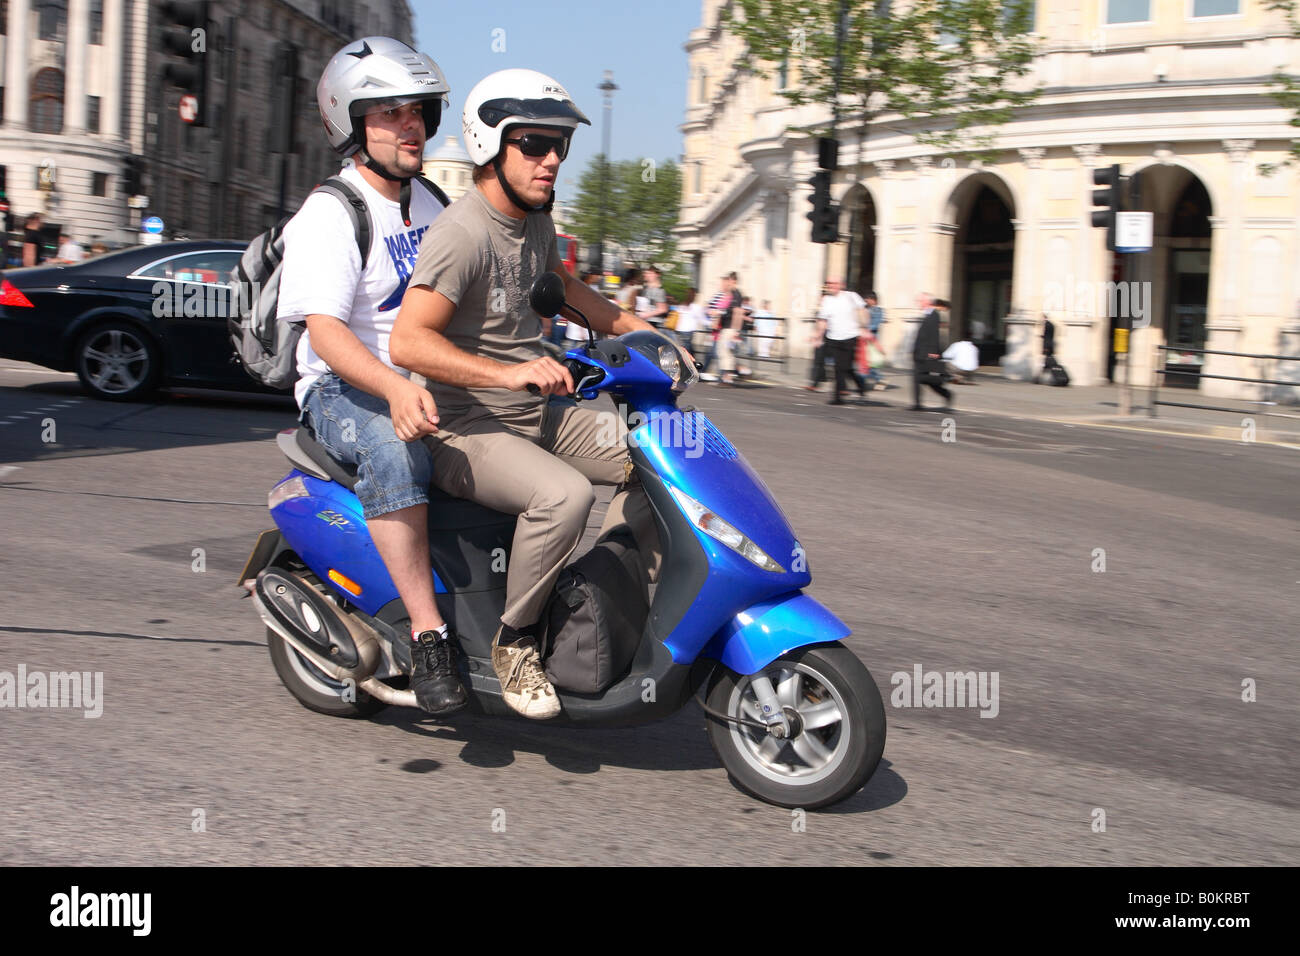 London motor scooter motorbike with pillion passenger commuter traffic driving around Trafalgar Square Stock Photo